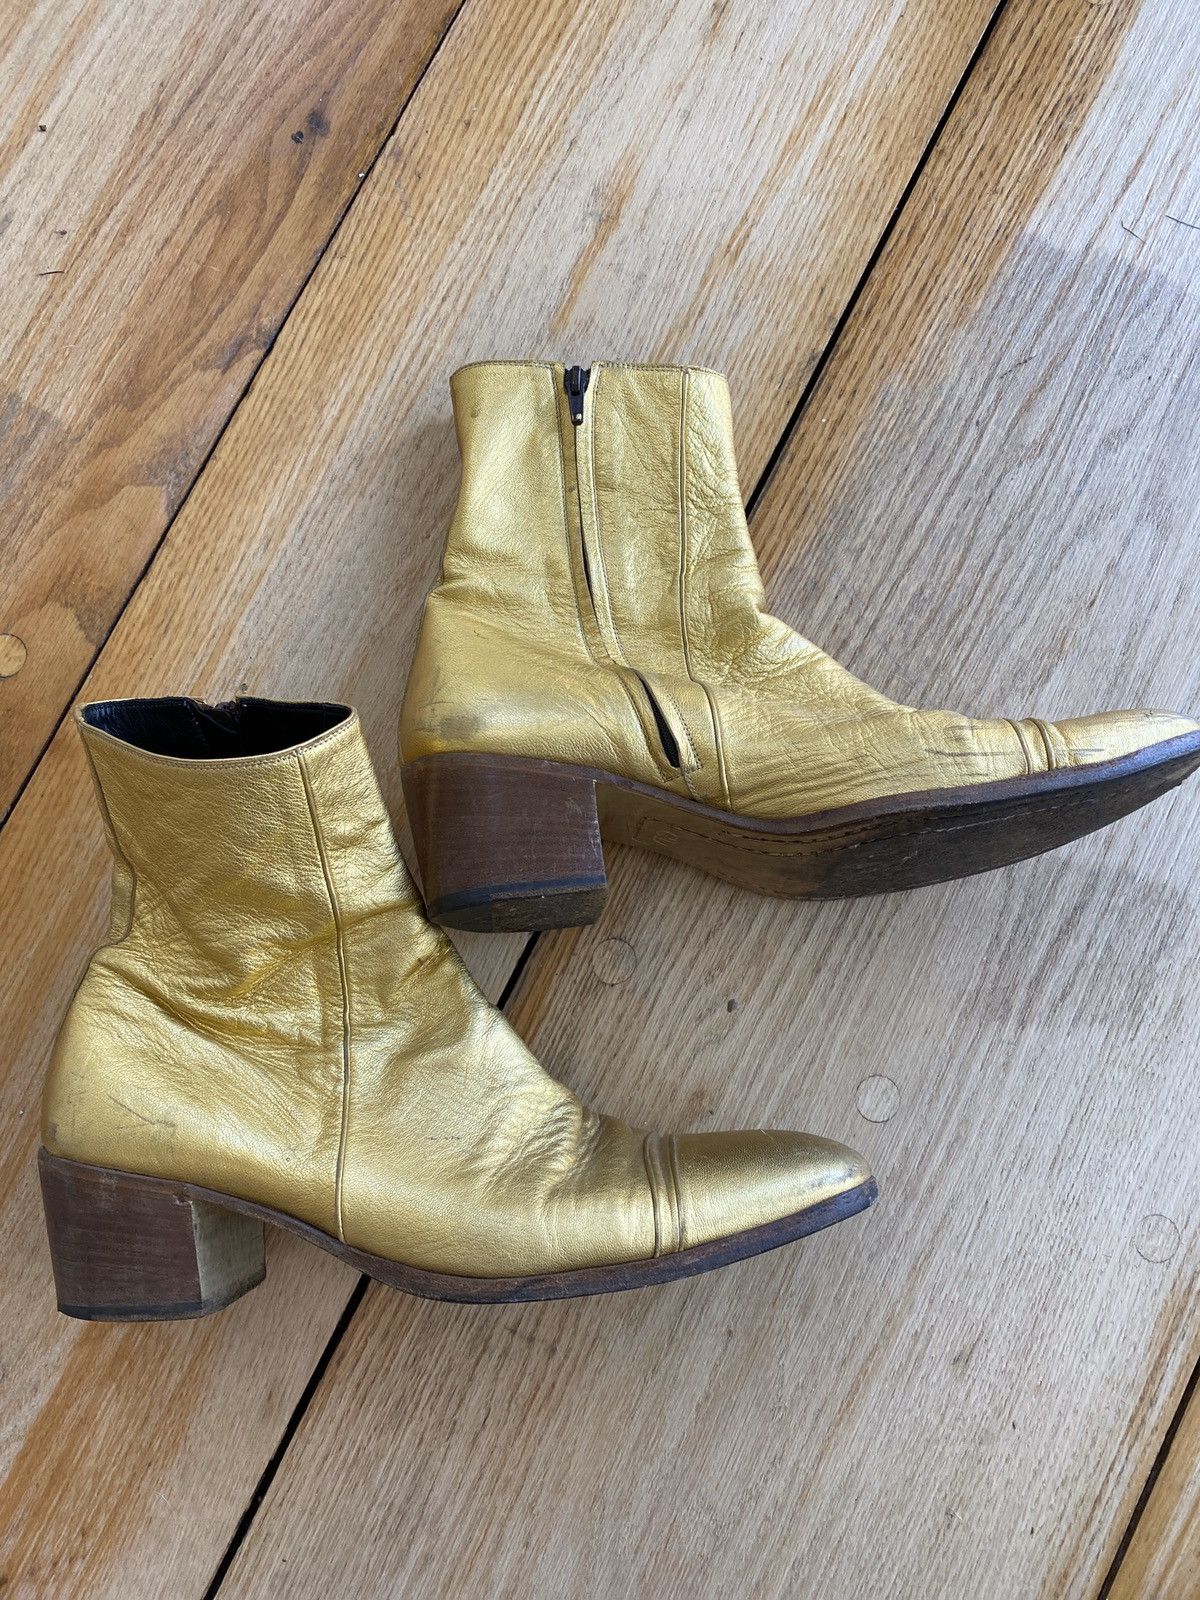 Dior Dior Homme by Hedi Slimane gold boots *Runway* sample | Grailed